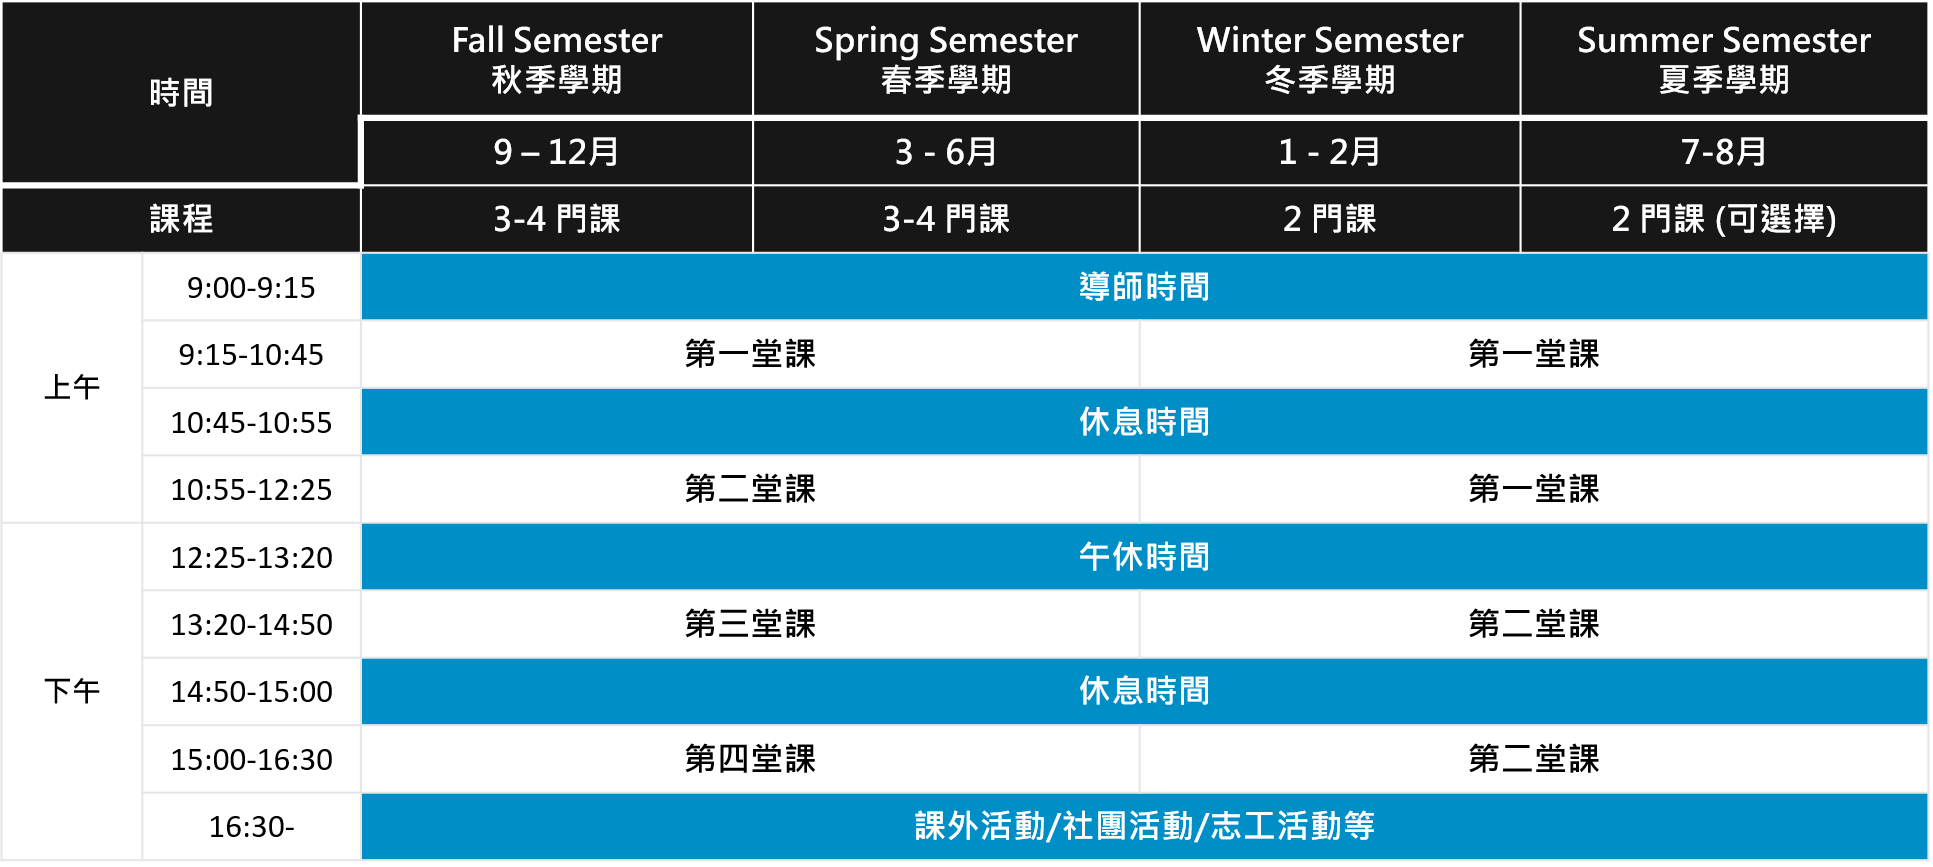 umc high school 國際高中 course